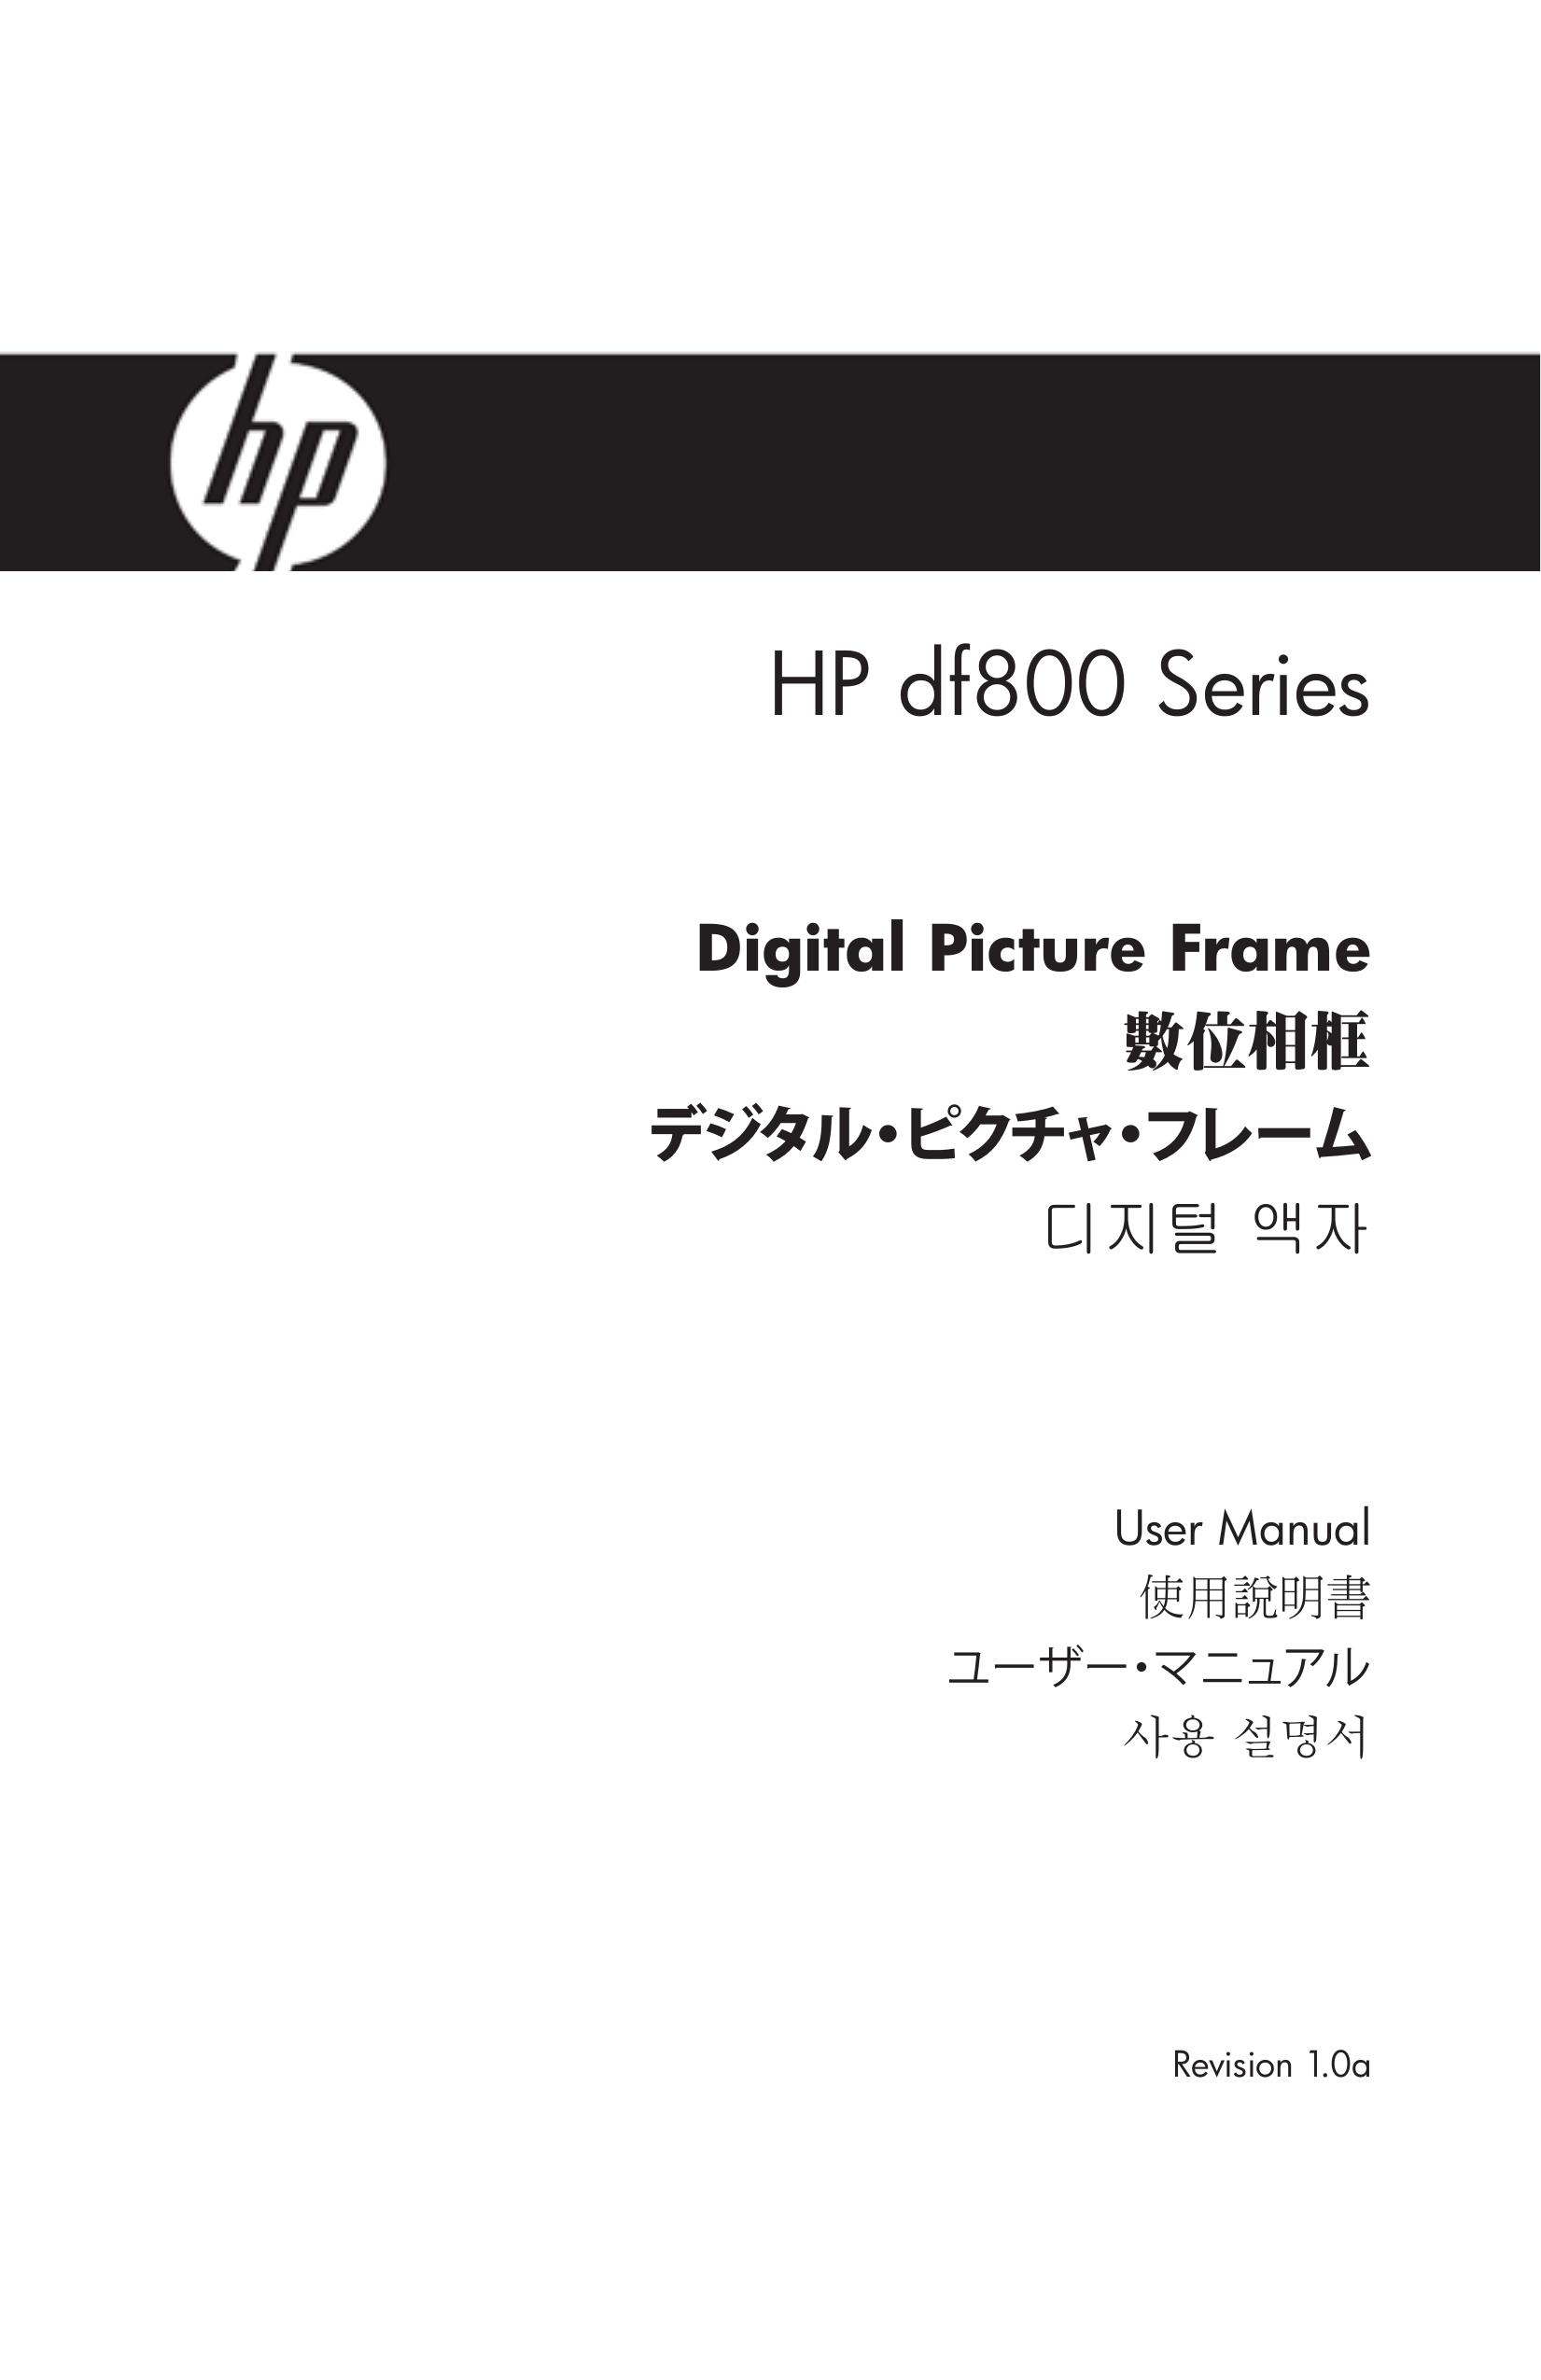 HP (Hewlett-Packard) DF800 Digital Photo Frame User Manual